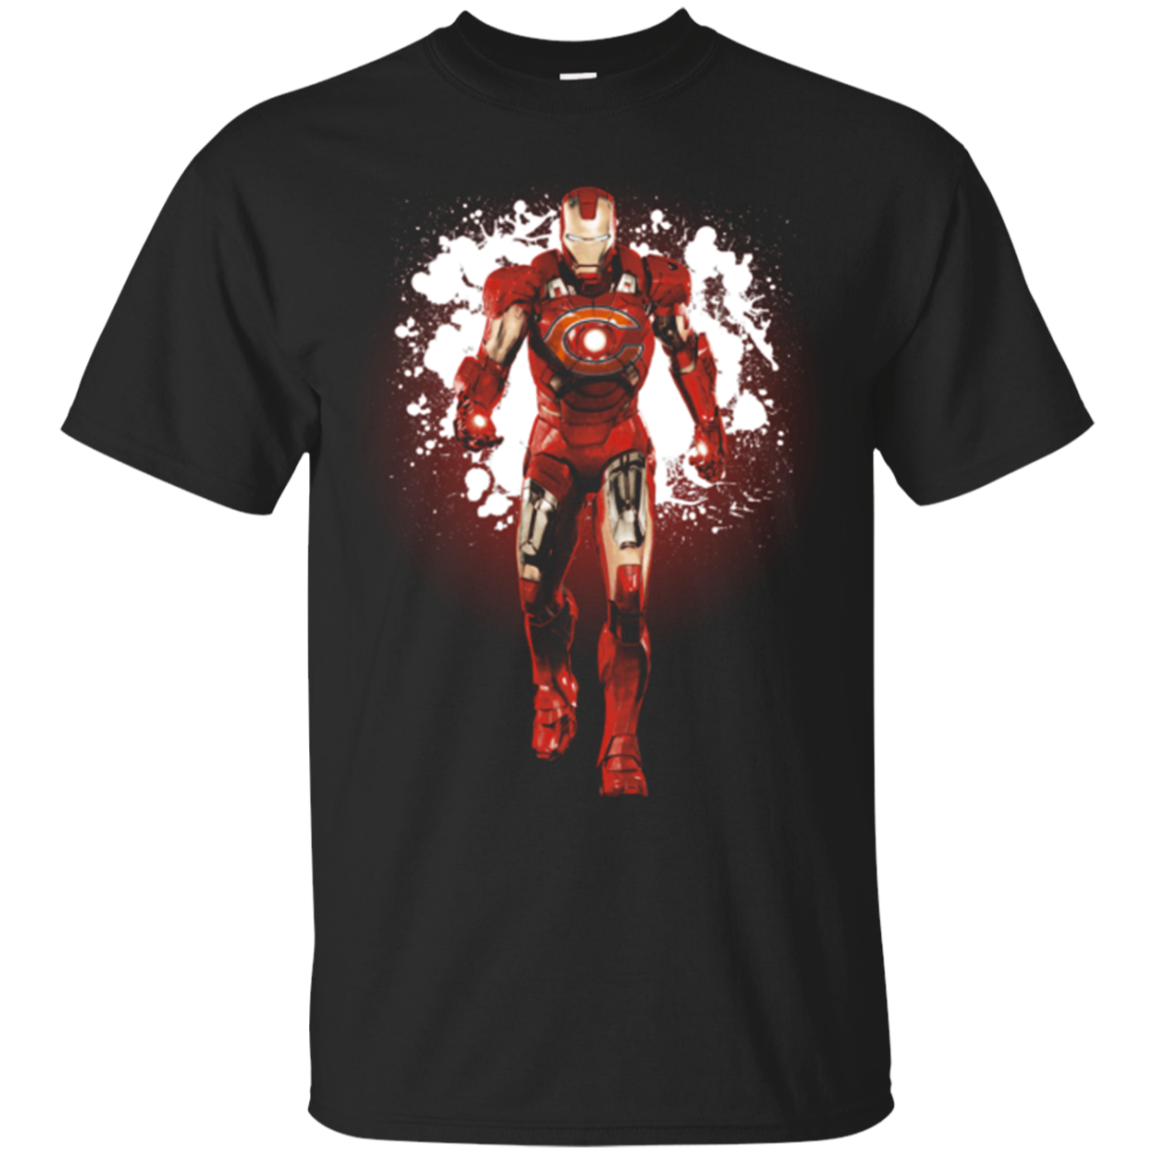 Iron Man T shirts - Teesmiley